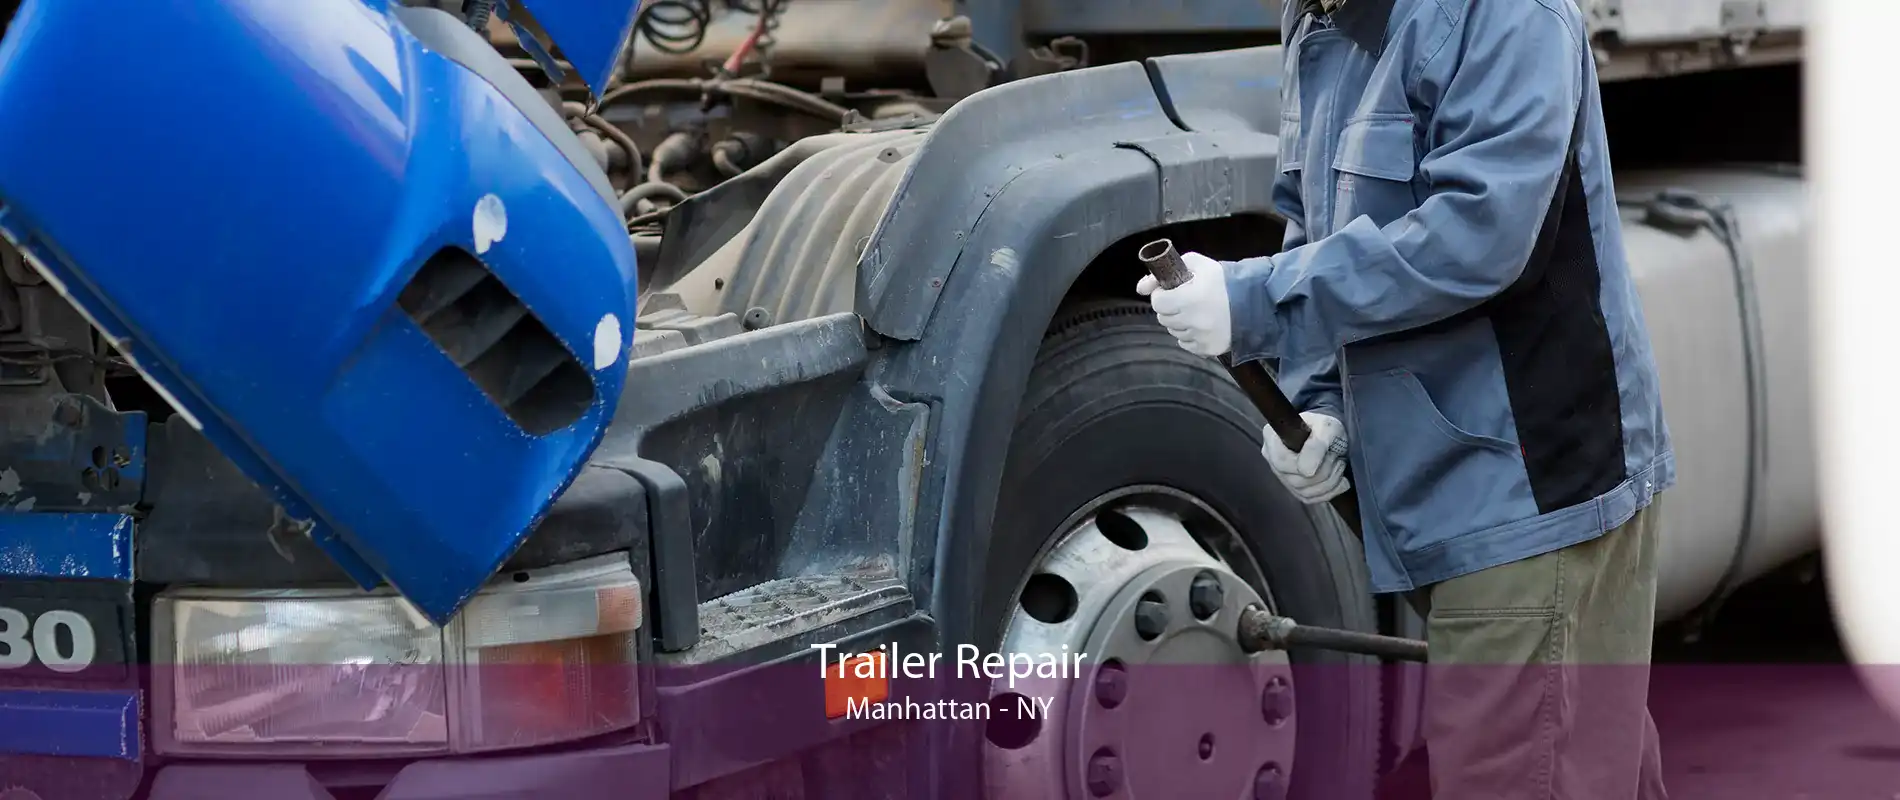 Trailer Repair Manhattan - NY